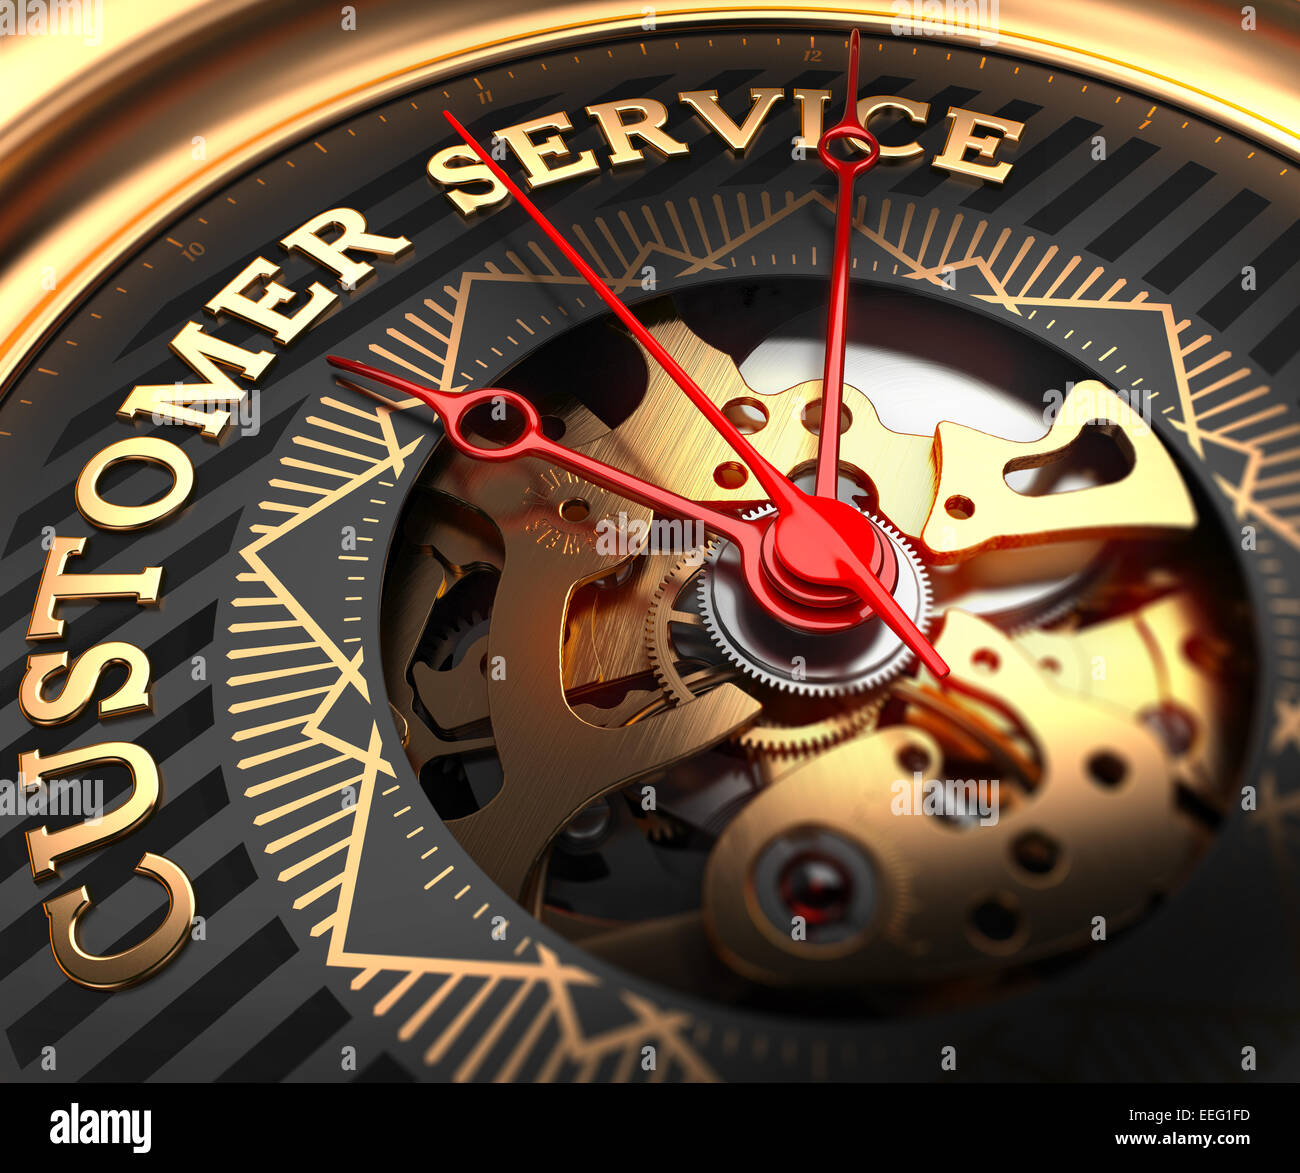 Customer Service on Black-Golden Watch Face. Stock Photo